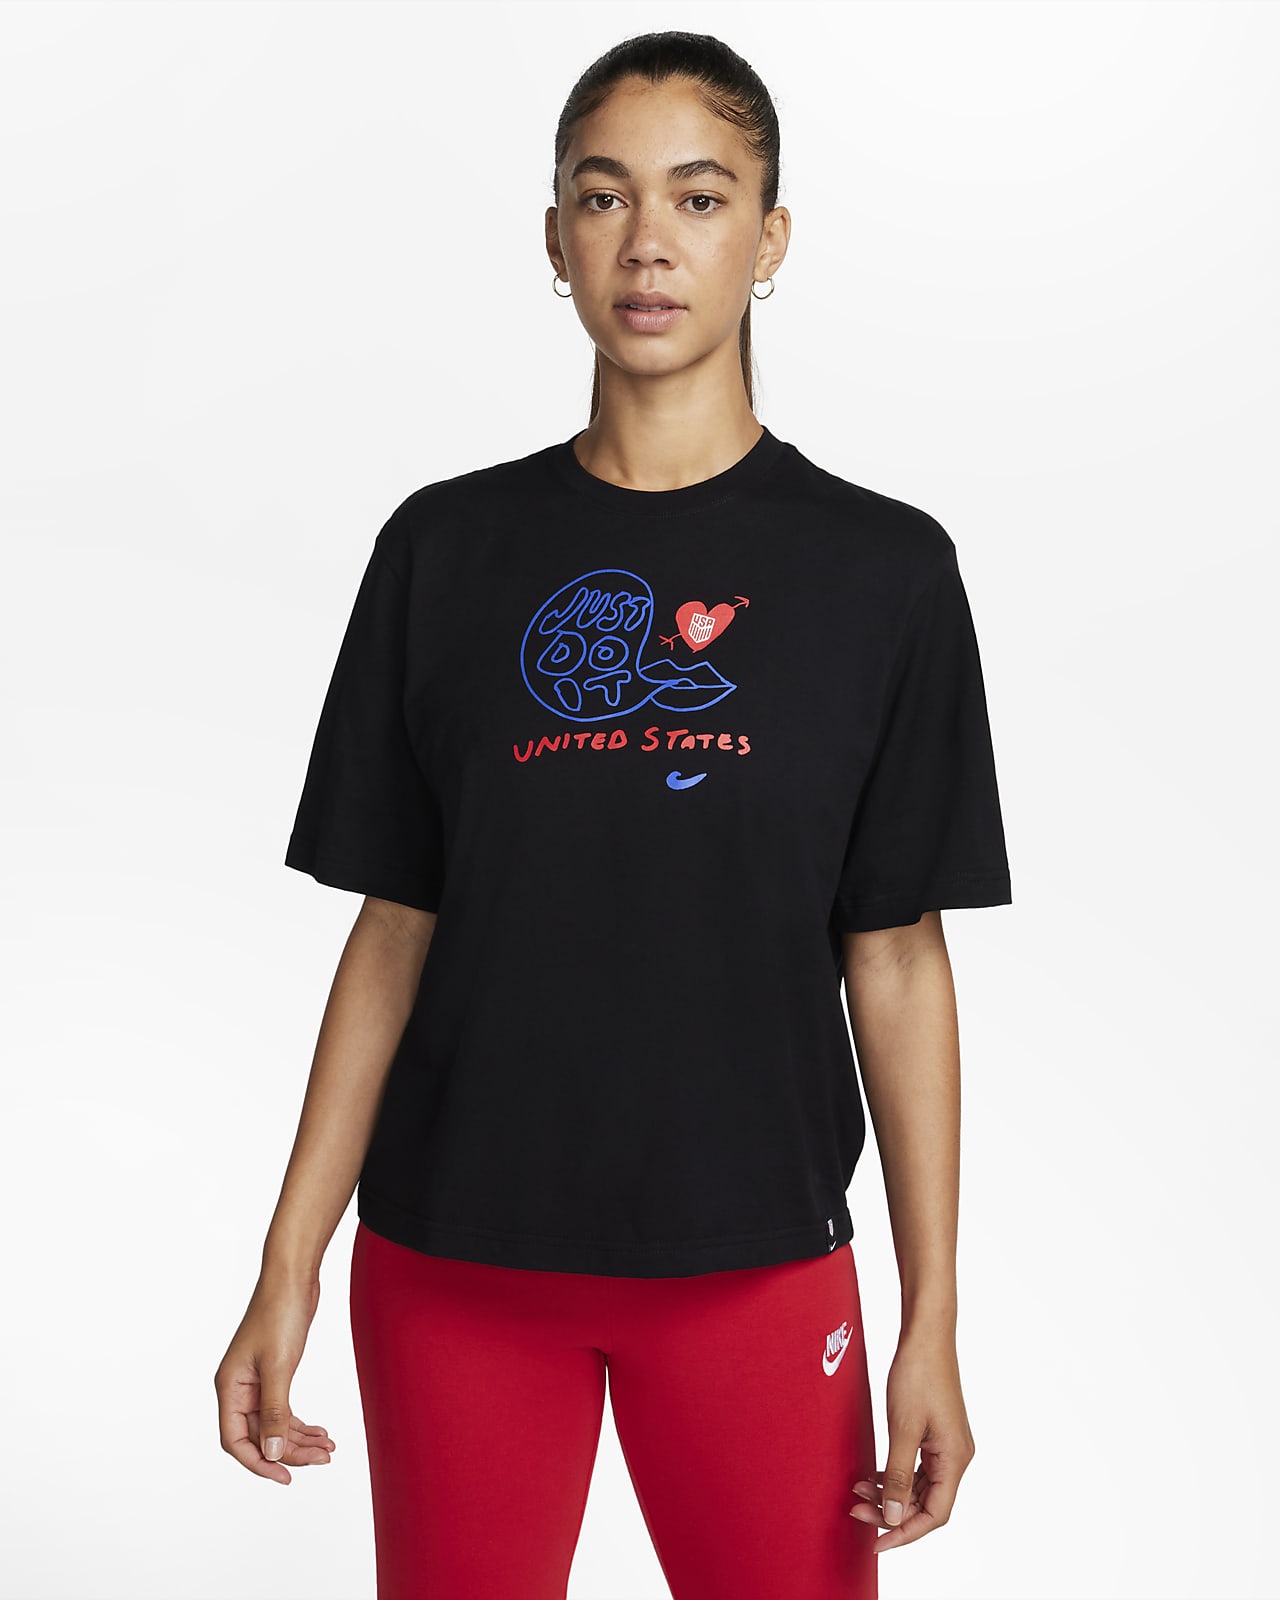 Iets Relatief Absoluut U.S. Women's Nike Soccer T-Shirt. Nike.com